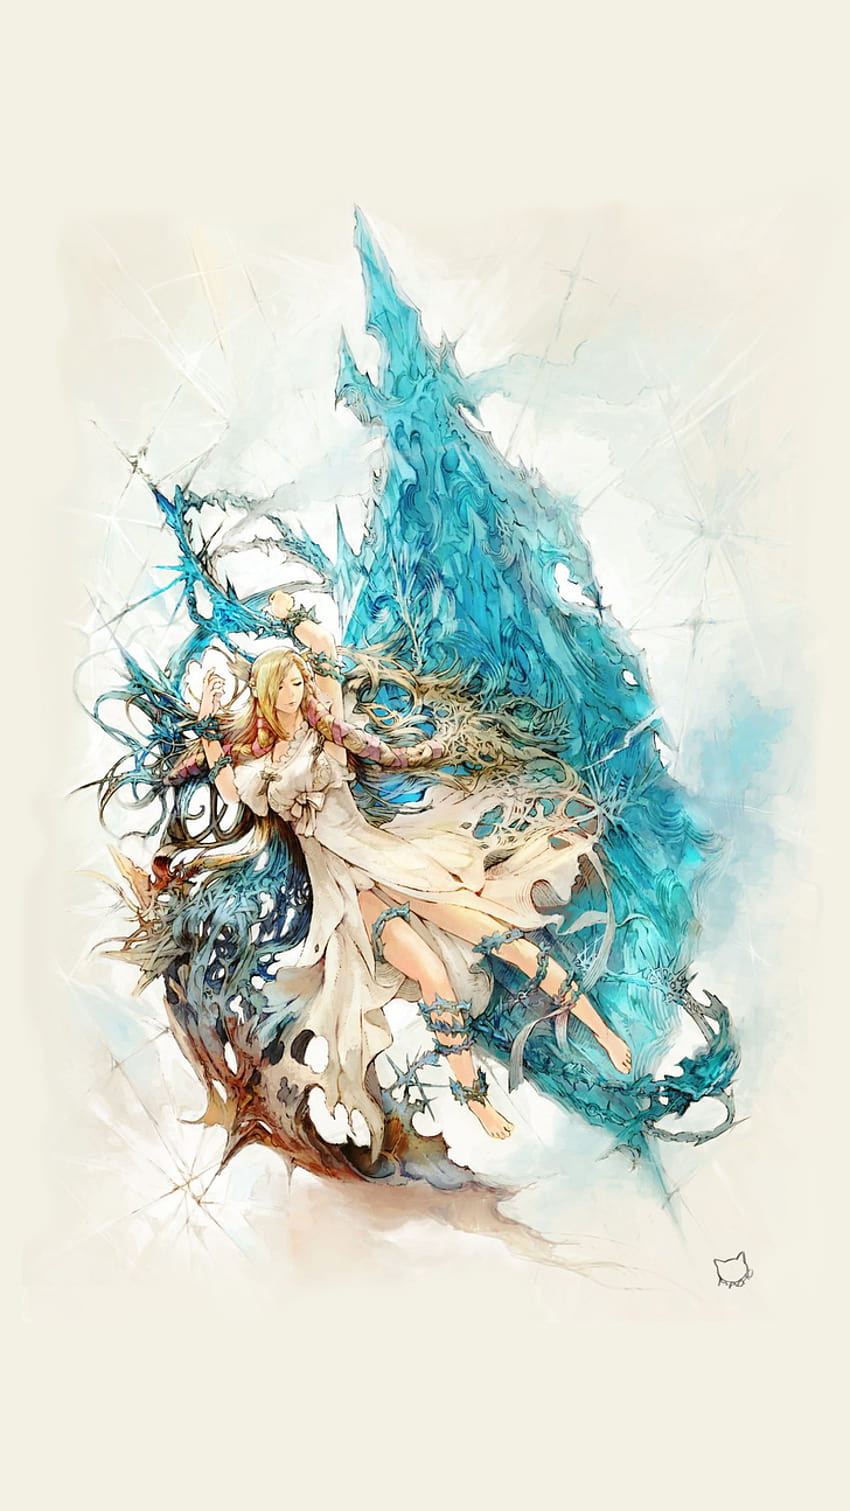 Phone background of Famitsus FFXIV cover art via FFXIVs Line page  r ffxiv